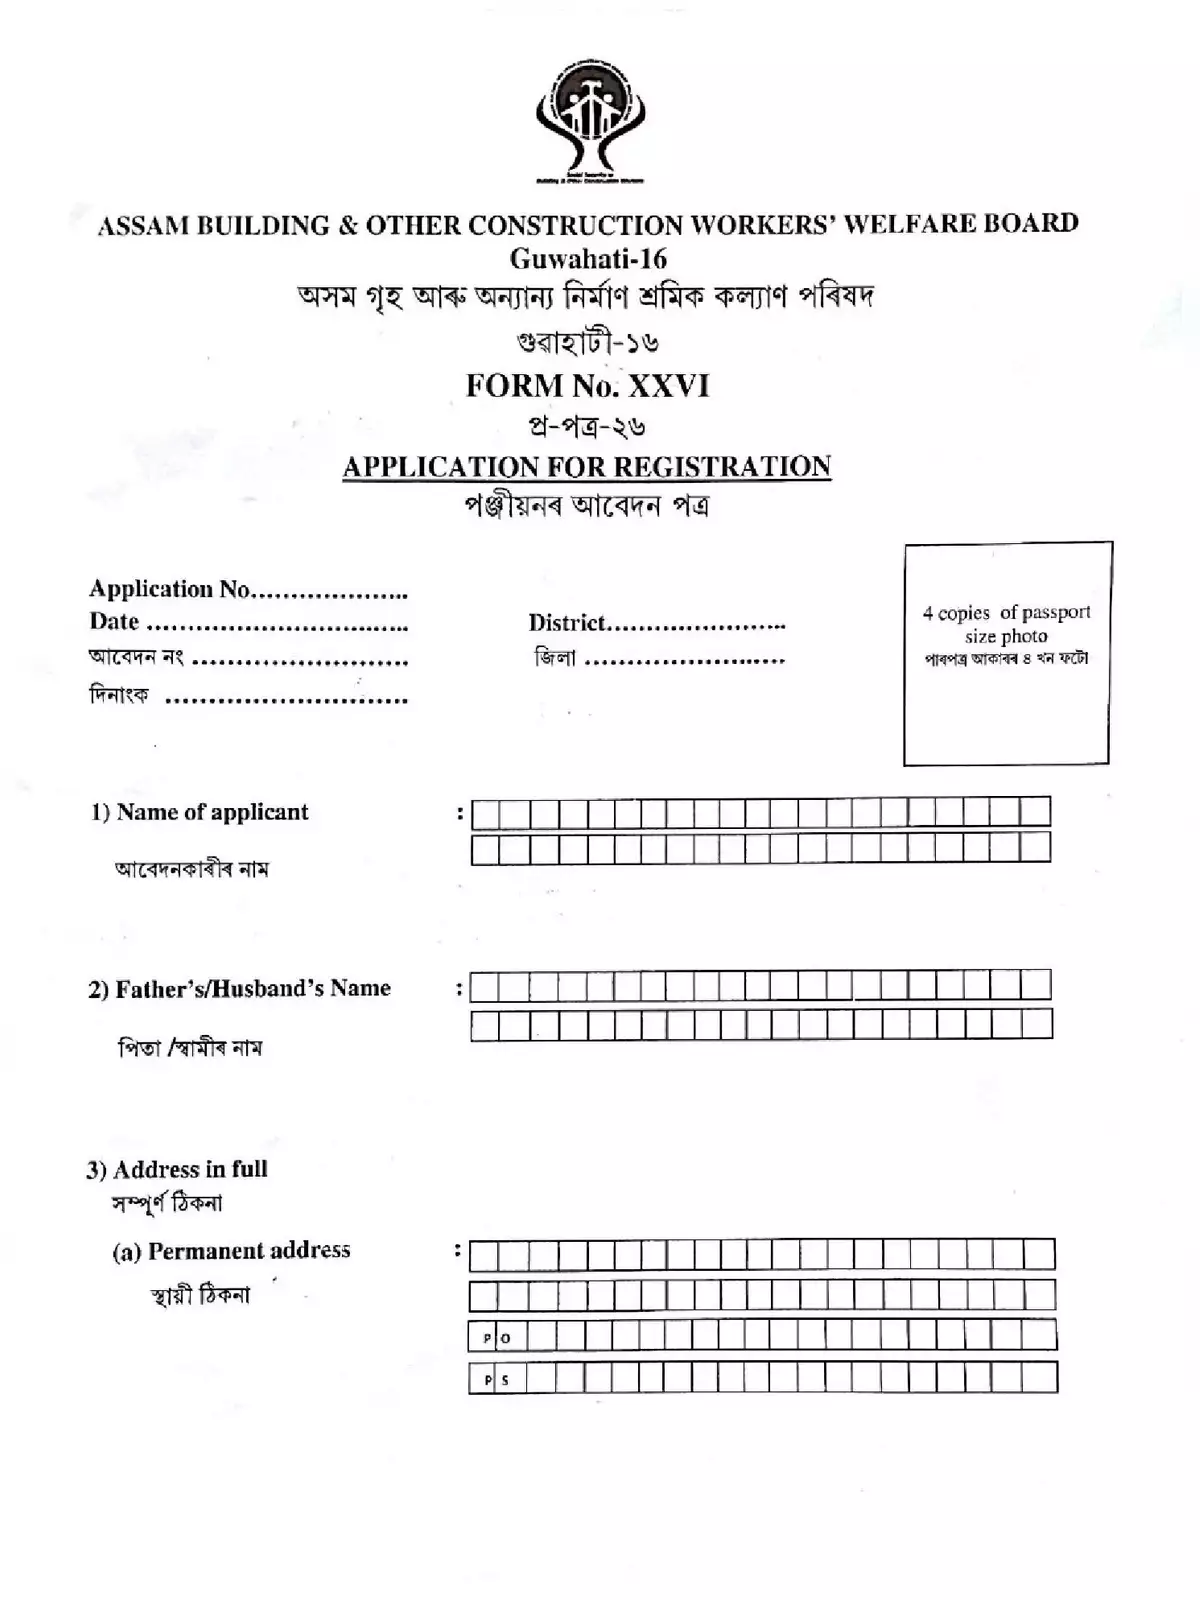 Assam Labour Registration Form for Construction Worker